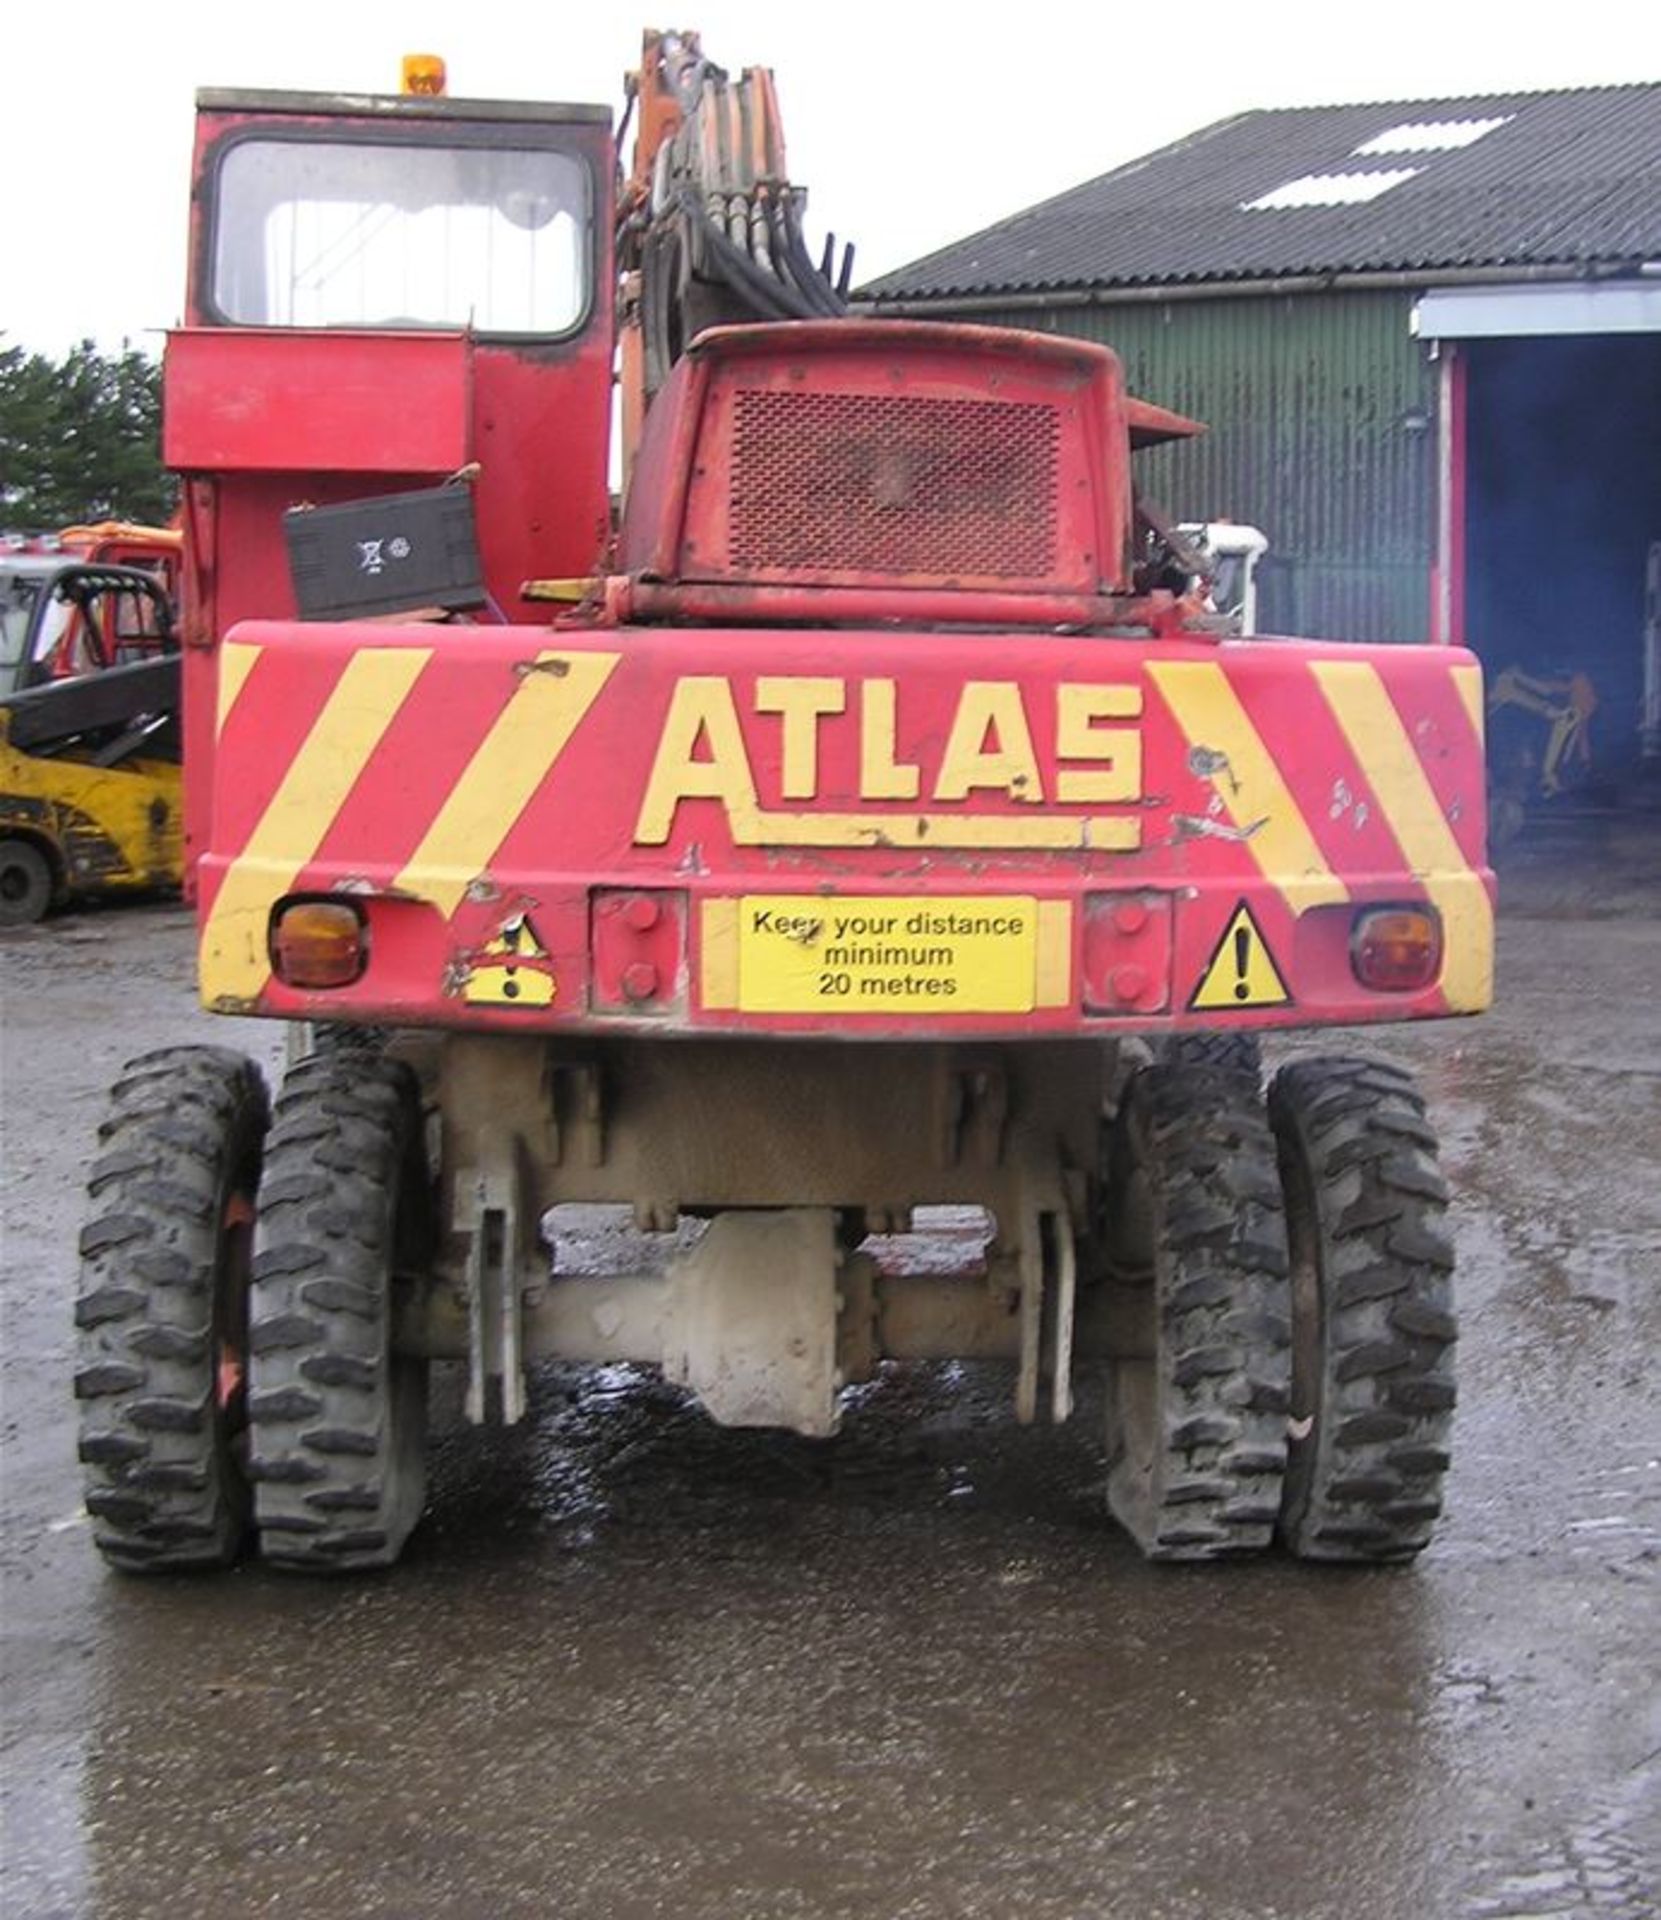 Atlas AB1302 Rubber Duck Excavator - Image 4 of 6